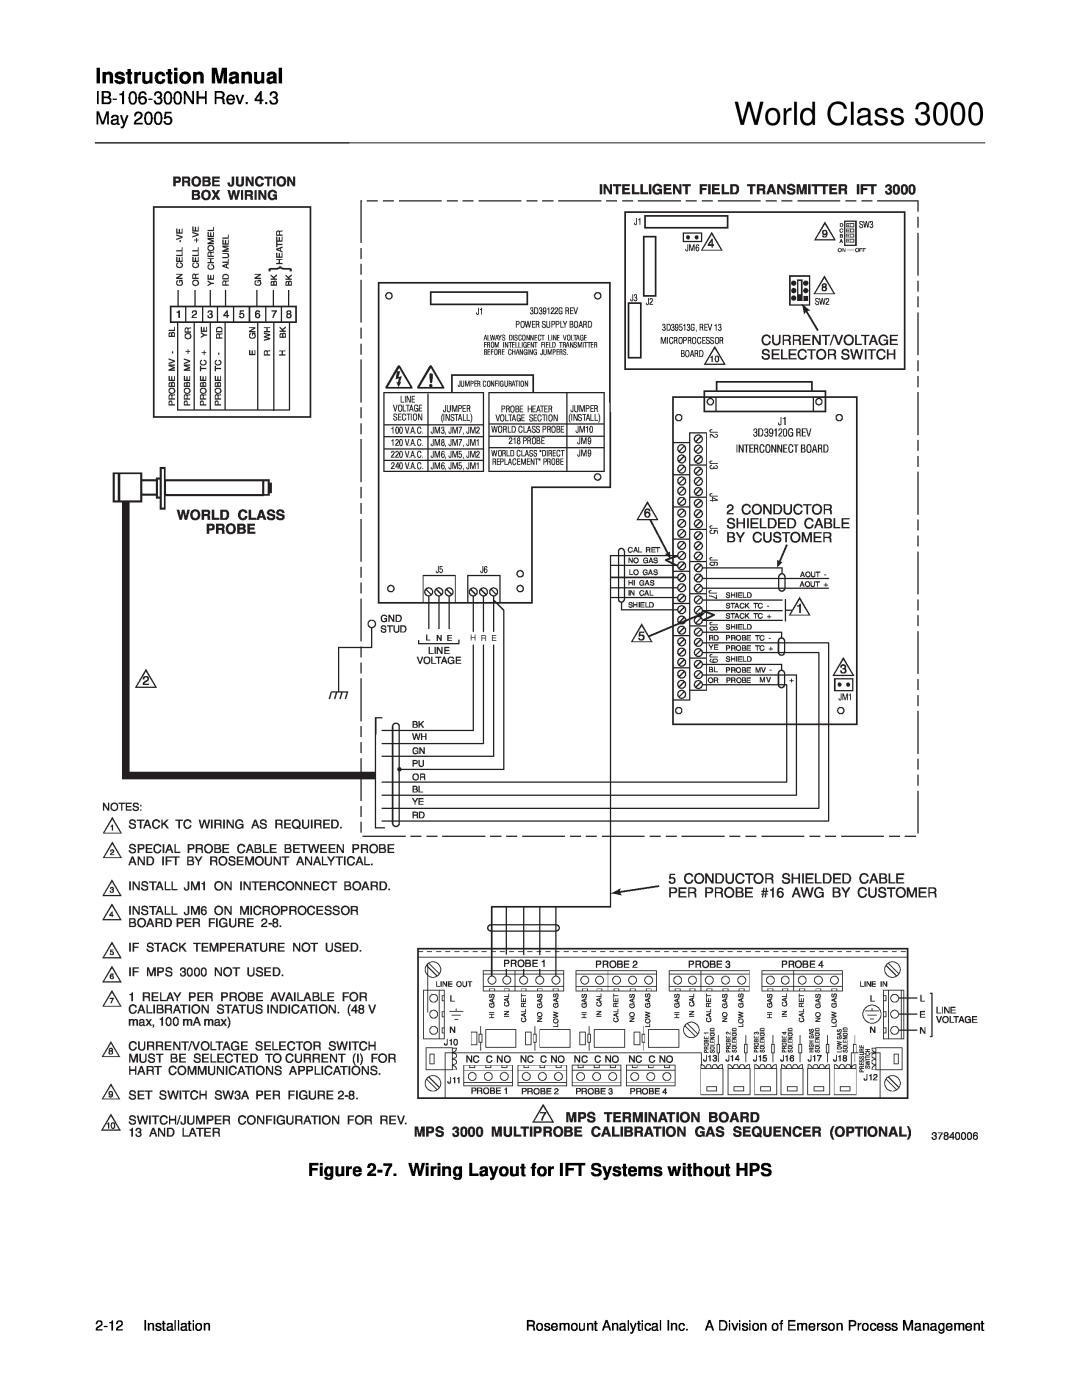 Emerson 3000 World Class, Intelligent Field Transmitter Ift, Probe, Mps Termination Board, 2-12Installation, Box Wiring 